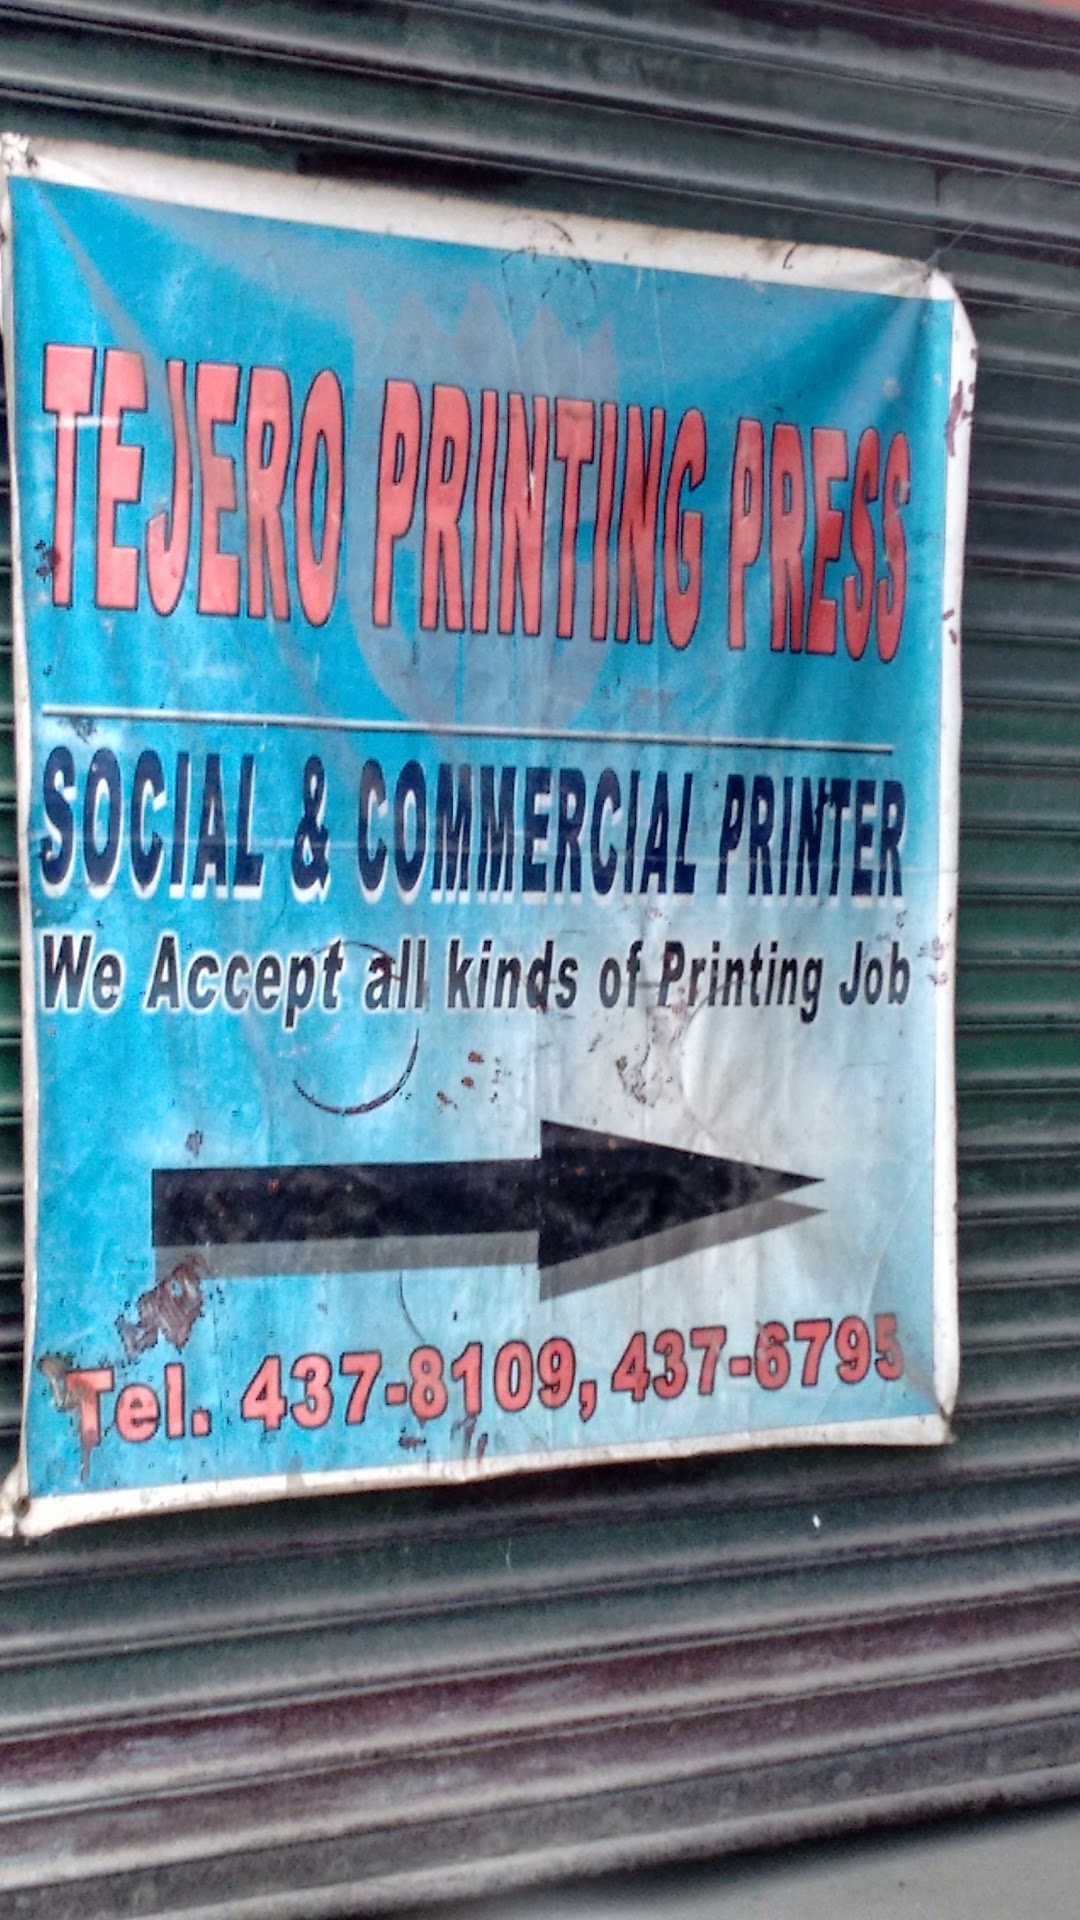 Tejero Printing Press